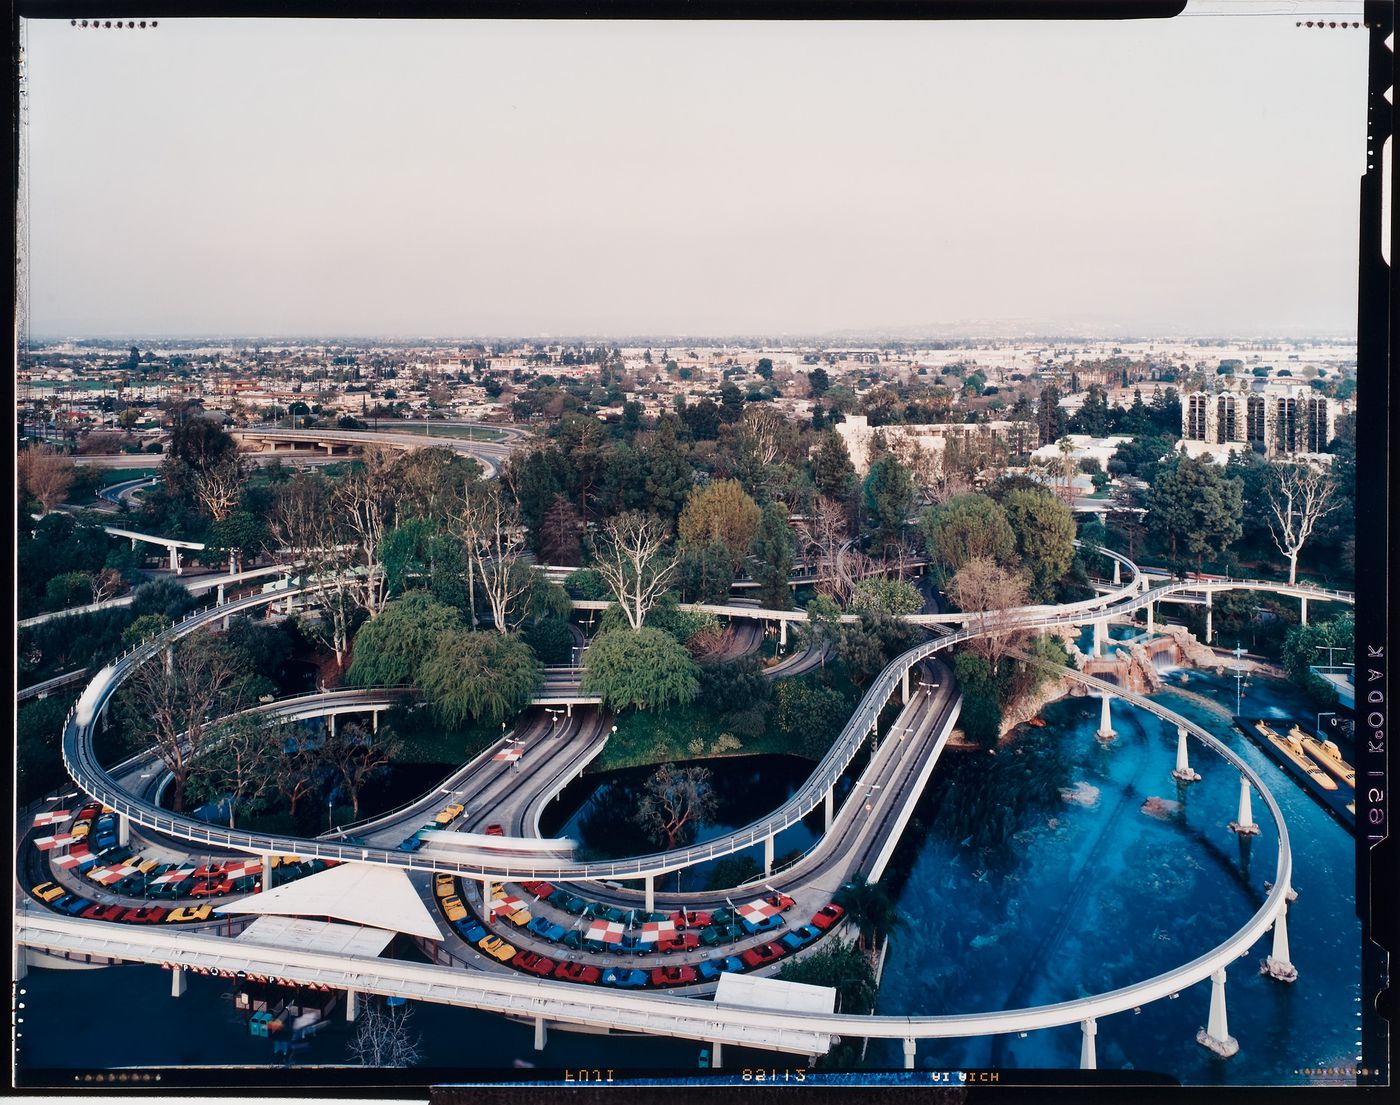 Autopia; Tomorrowland, Disneyland, Anaheim, California